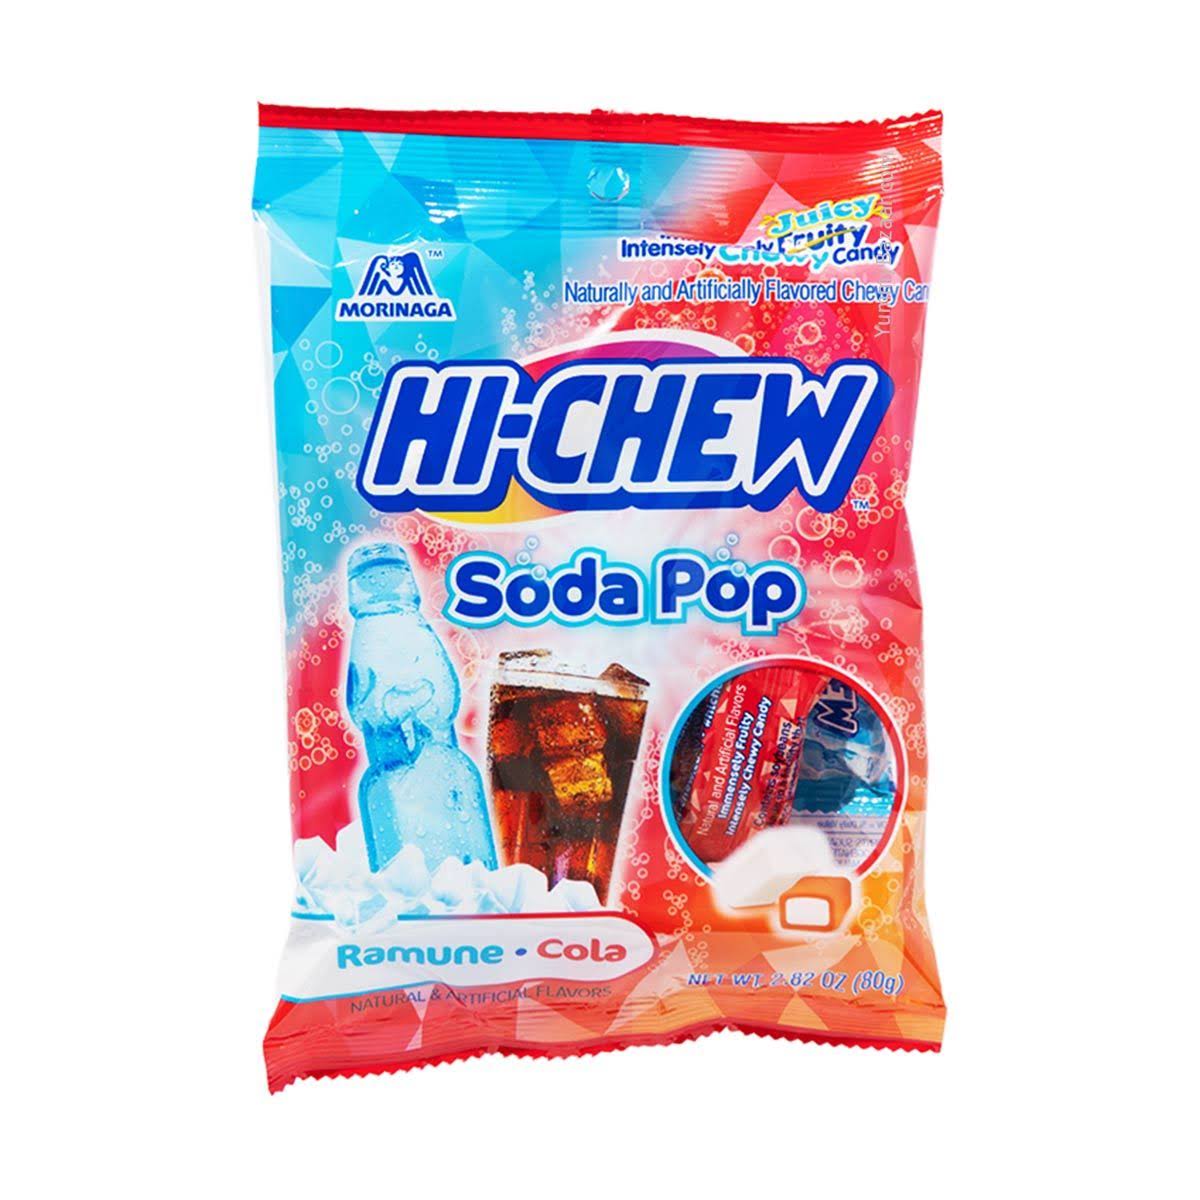 Hi-Chew Chewy Candy, Soda Pop - 2.82 oz